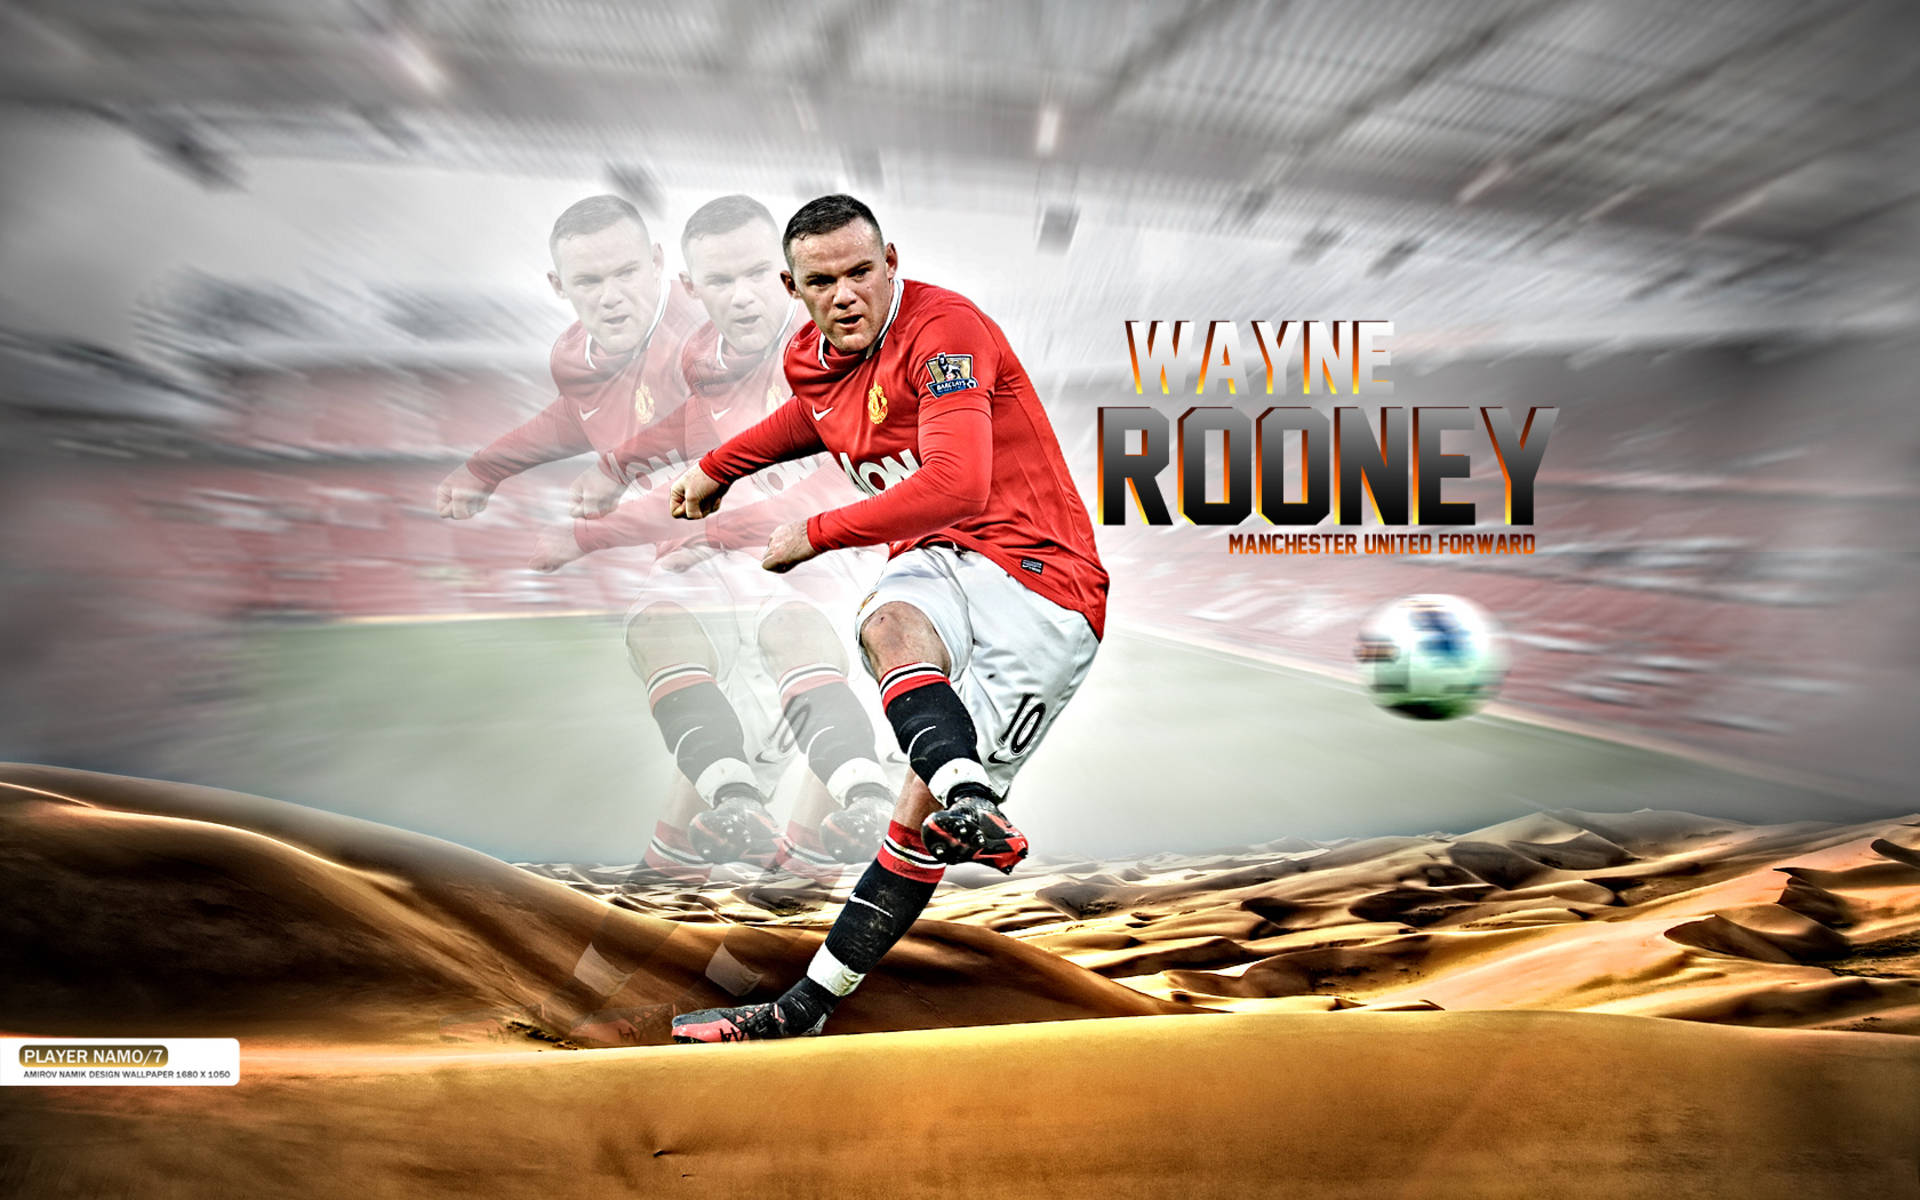 Wayne Rooney Manchester United Forward